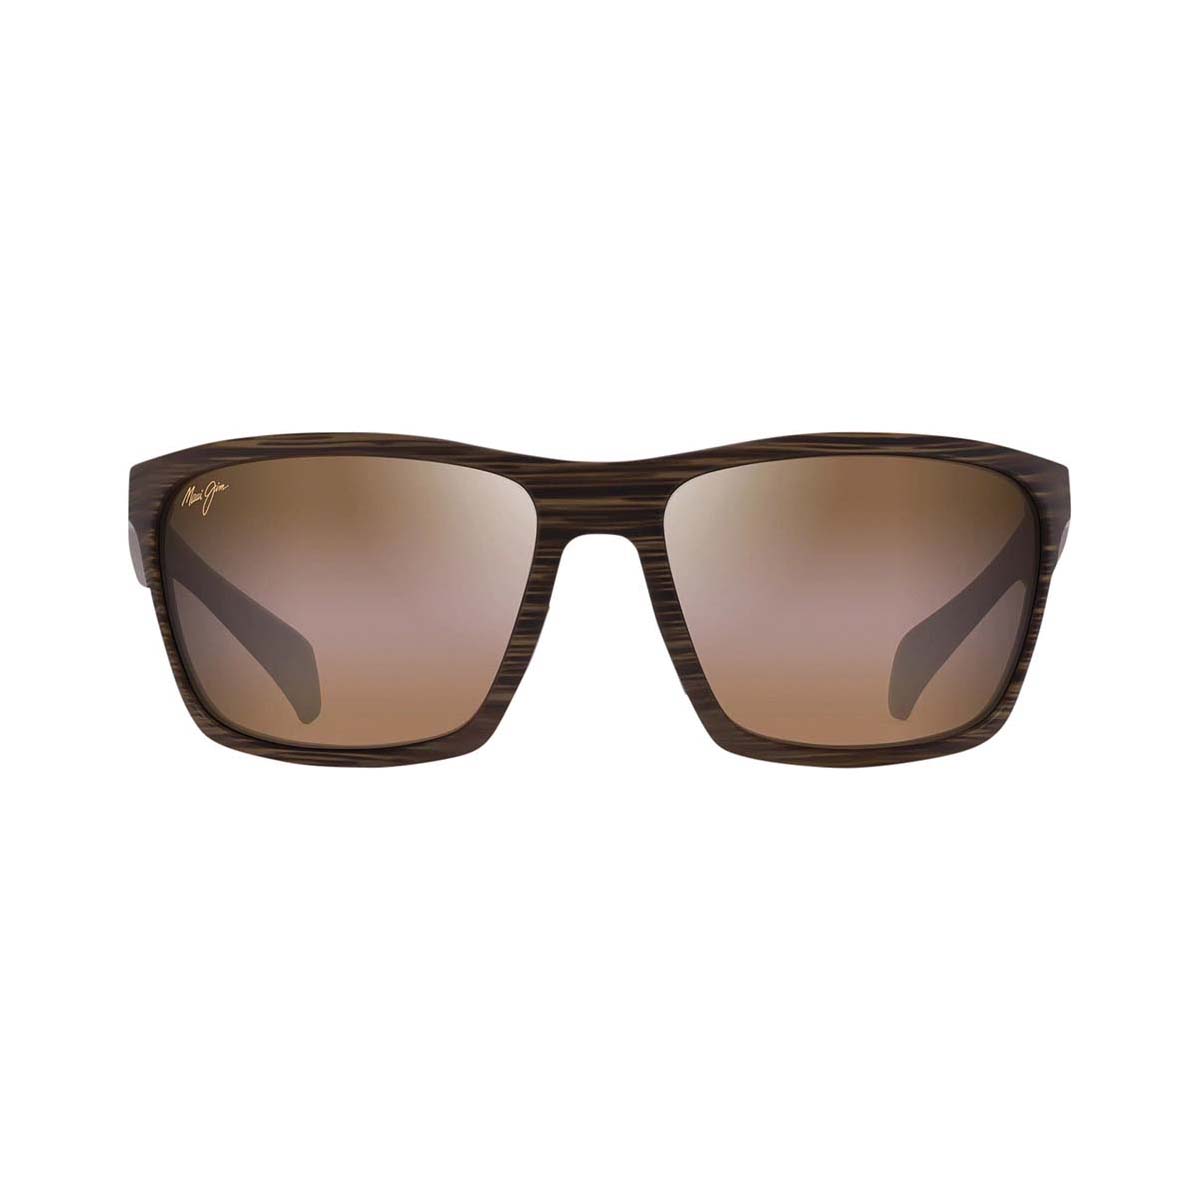 Maui Jim Men's Makoa Sunglasses with Brown Lens